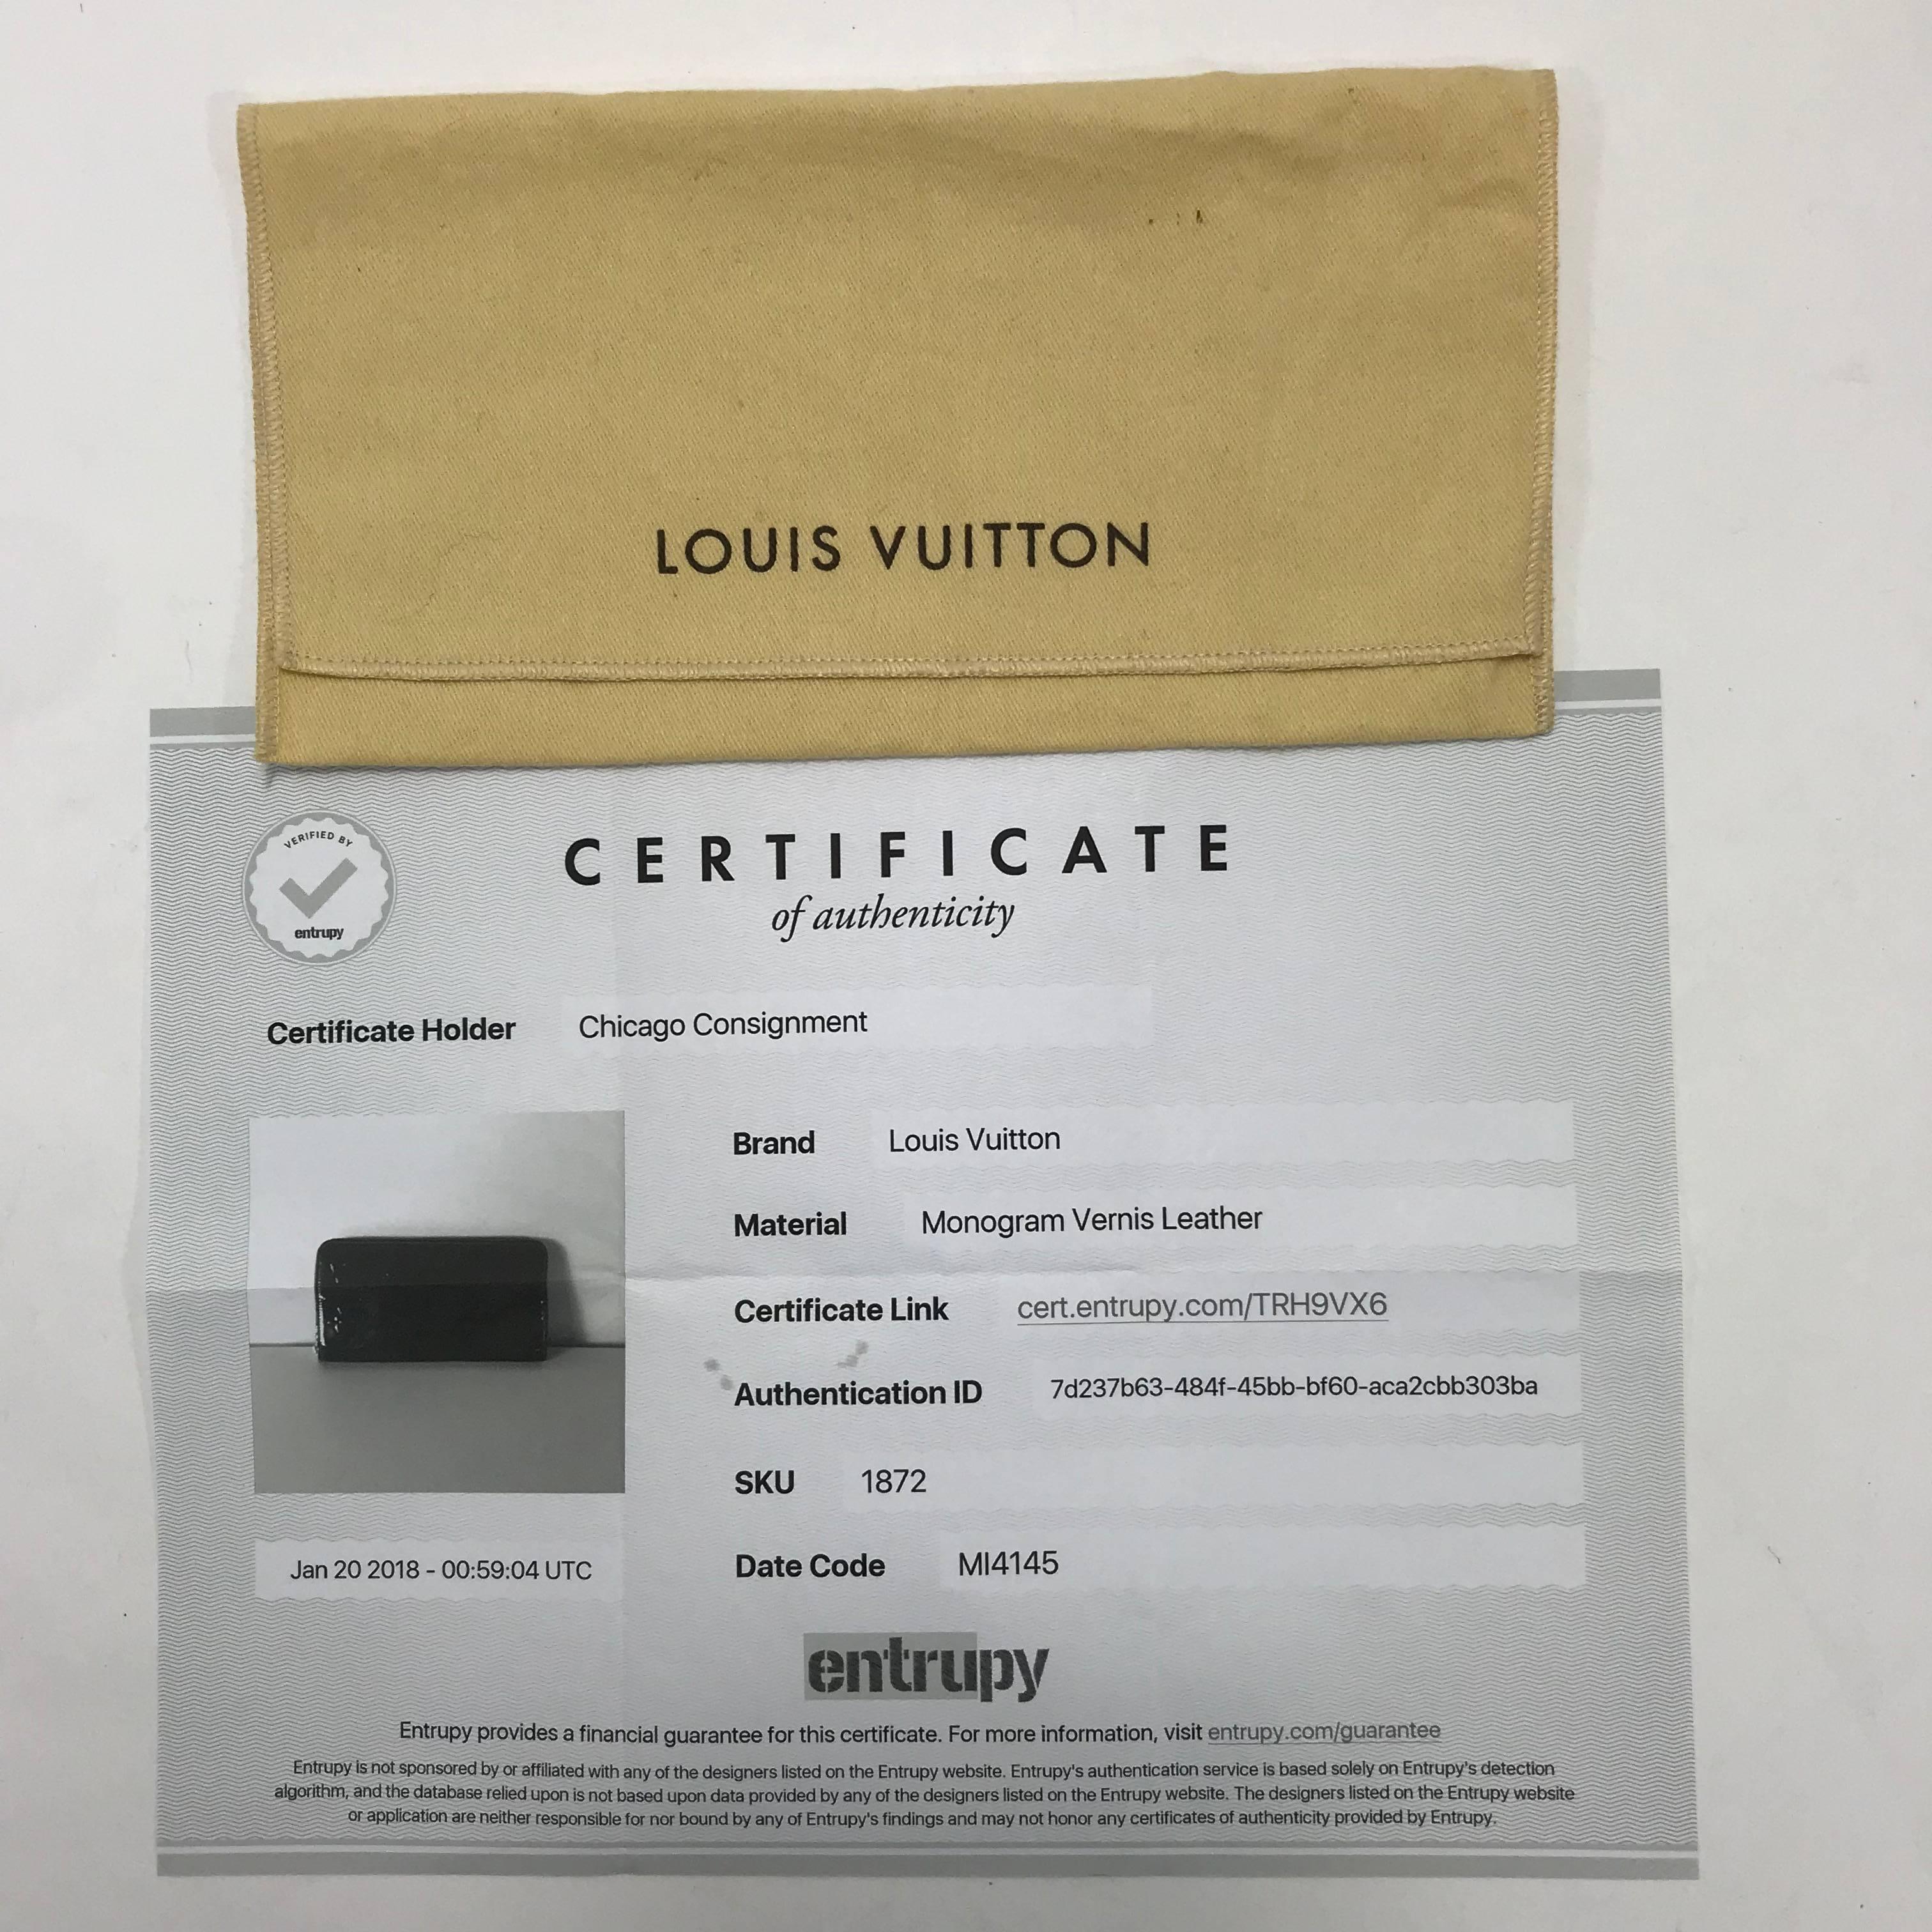 MODEL - Louis Vuitton Vernis Zippy Wallet in Rouge Fauviste

CONDITION - Looks New!

SKU - 1872

ORIGINAL RETAIL PRICE - 750 + tax

DATE/SERIAL CODE - MI4145

ORIGIN - France

PRODUCTION - 2015

DIMENSIONS - L8 x H4.5 x D1

STRAP/HANDLE DROP -